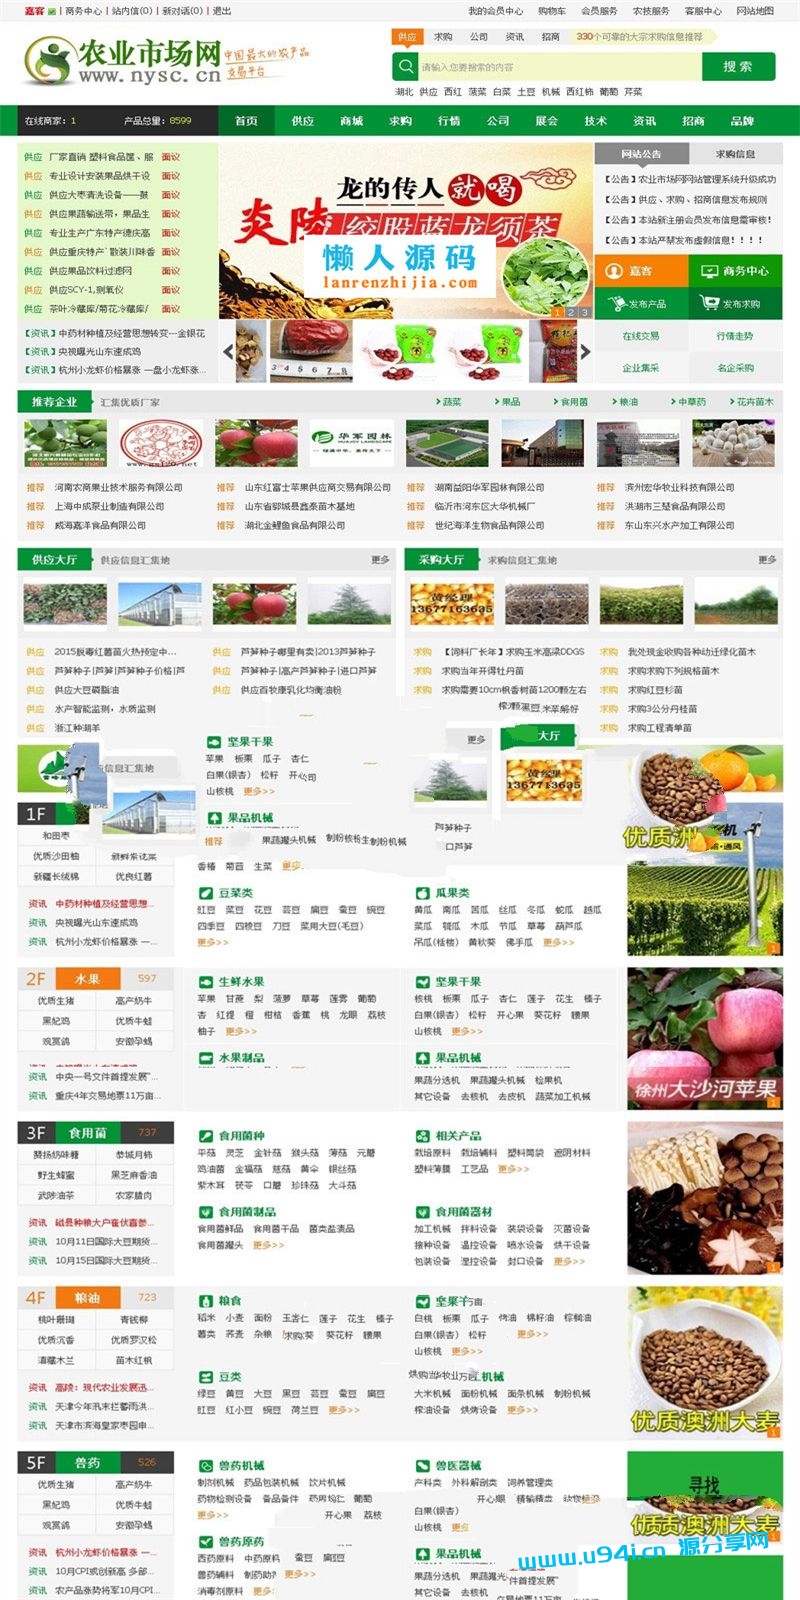 destoon6.0模板 仿绿色惠农网农业农产品交易平台网站源码 带手机WAP版